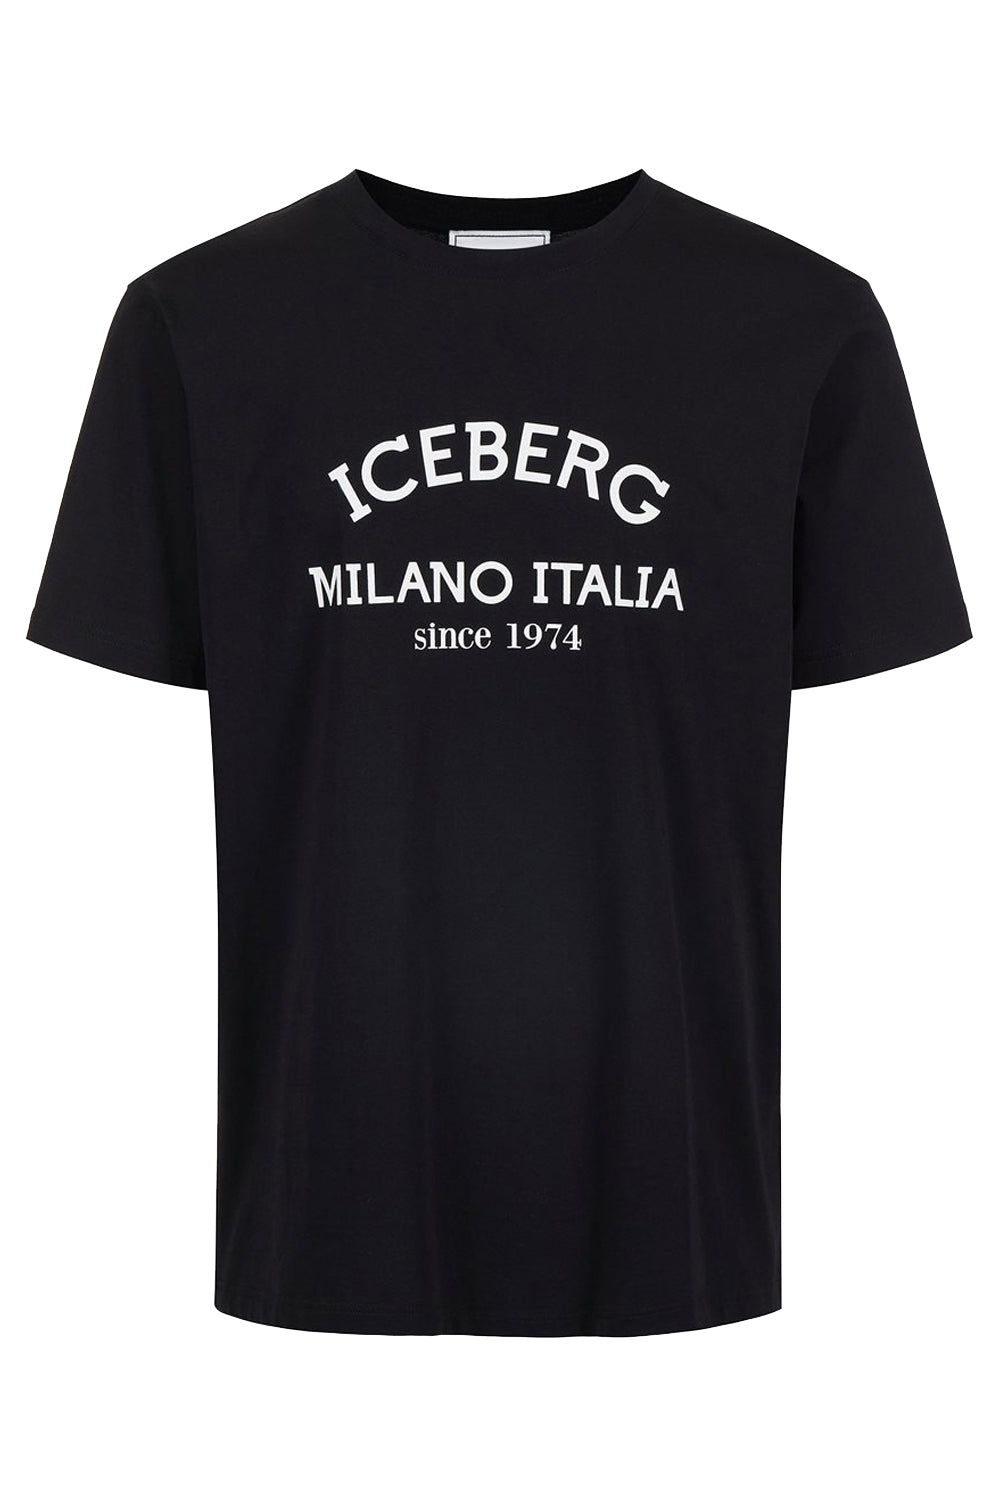 ICEBERG T-shirt con logo istituzionale